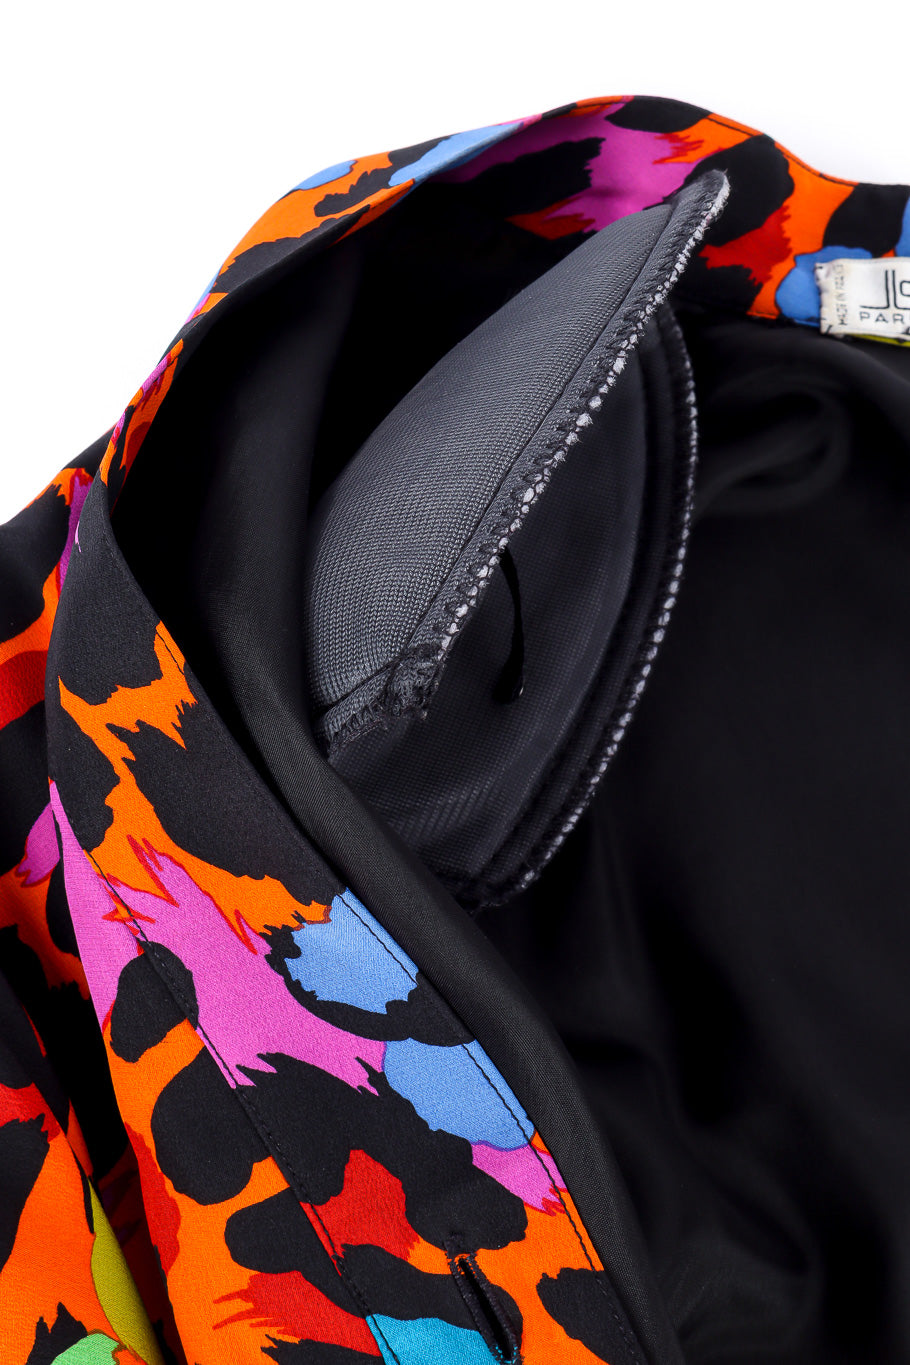 Neon leopard print dress by Jean Louise Scherrer flat lay shoulder pads @recessla